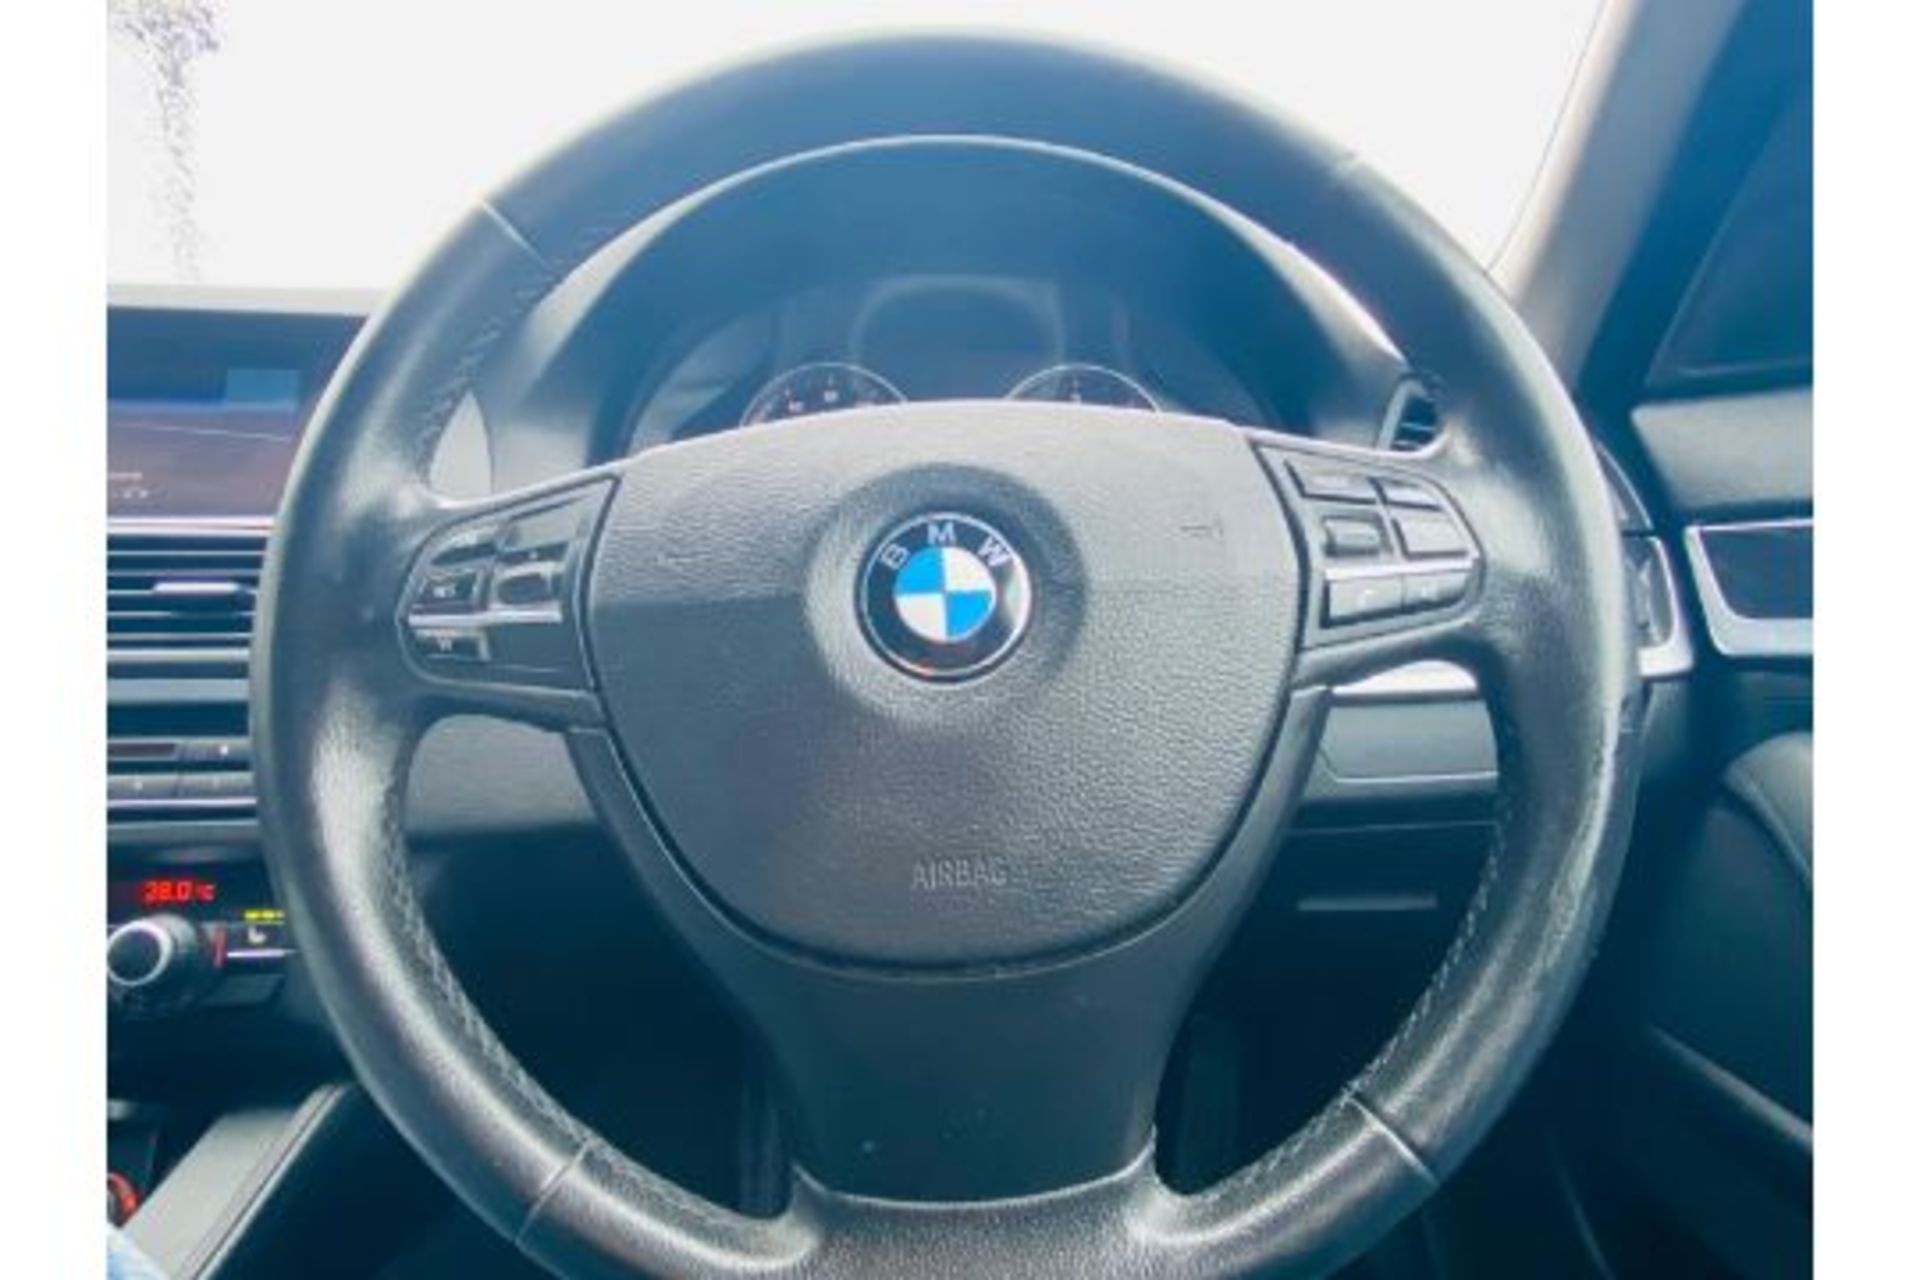 (RESERVE MET) BMW 520D Efficient dynamics 180 Bhp 2012 - 12 (Reg) -Sat Nav -Metallic Grey -AC-No Vat - Image 32 of 41